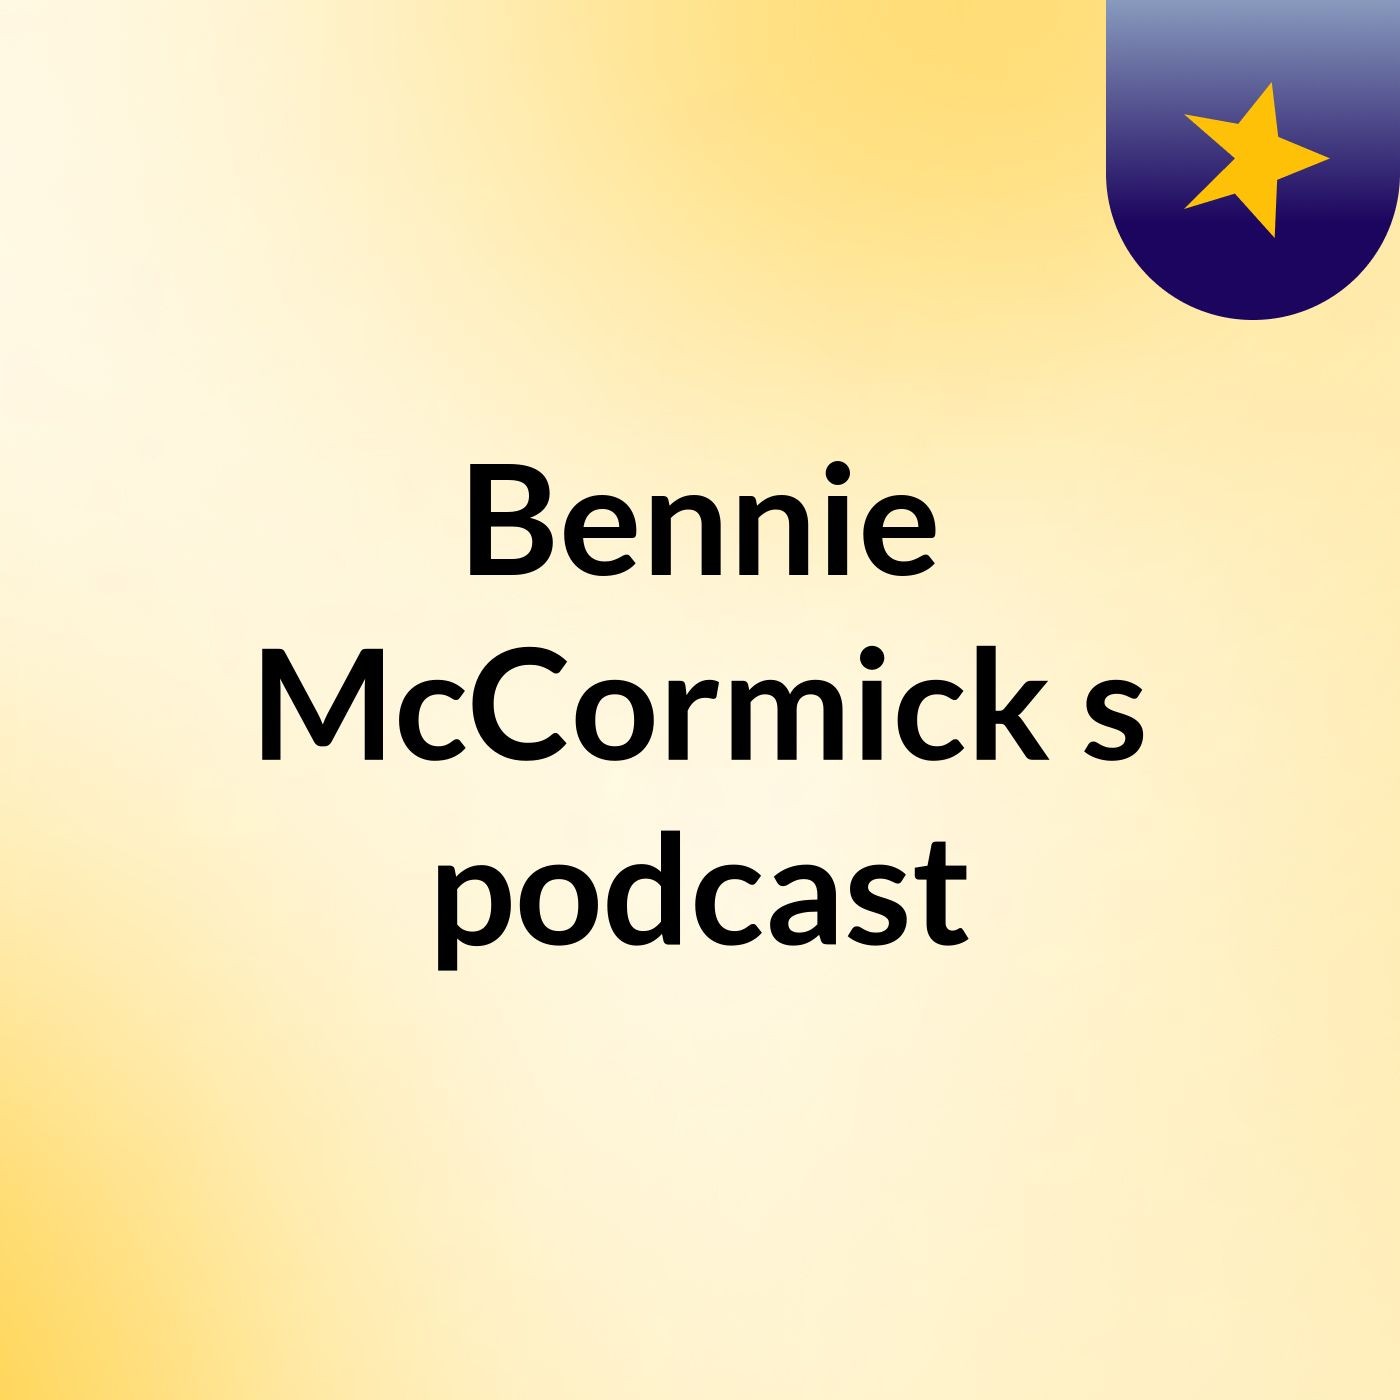 Bennie McCormick's podcast